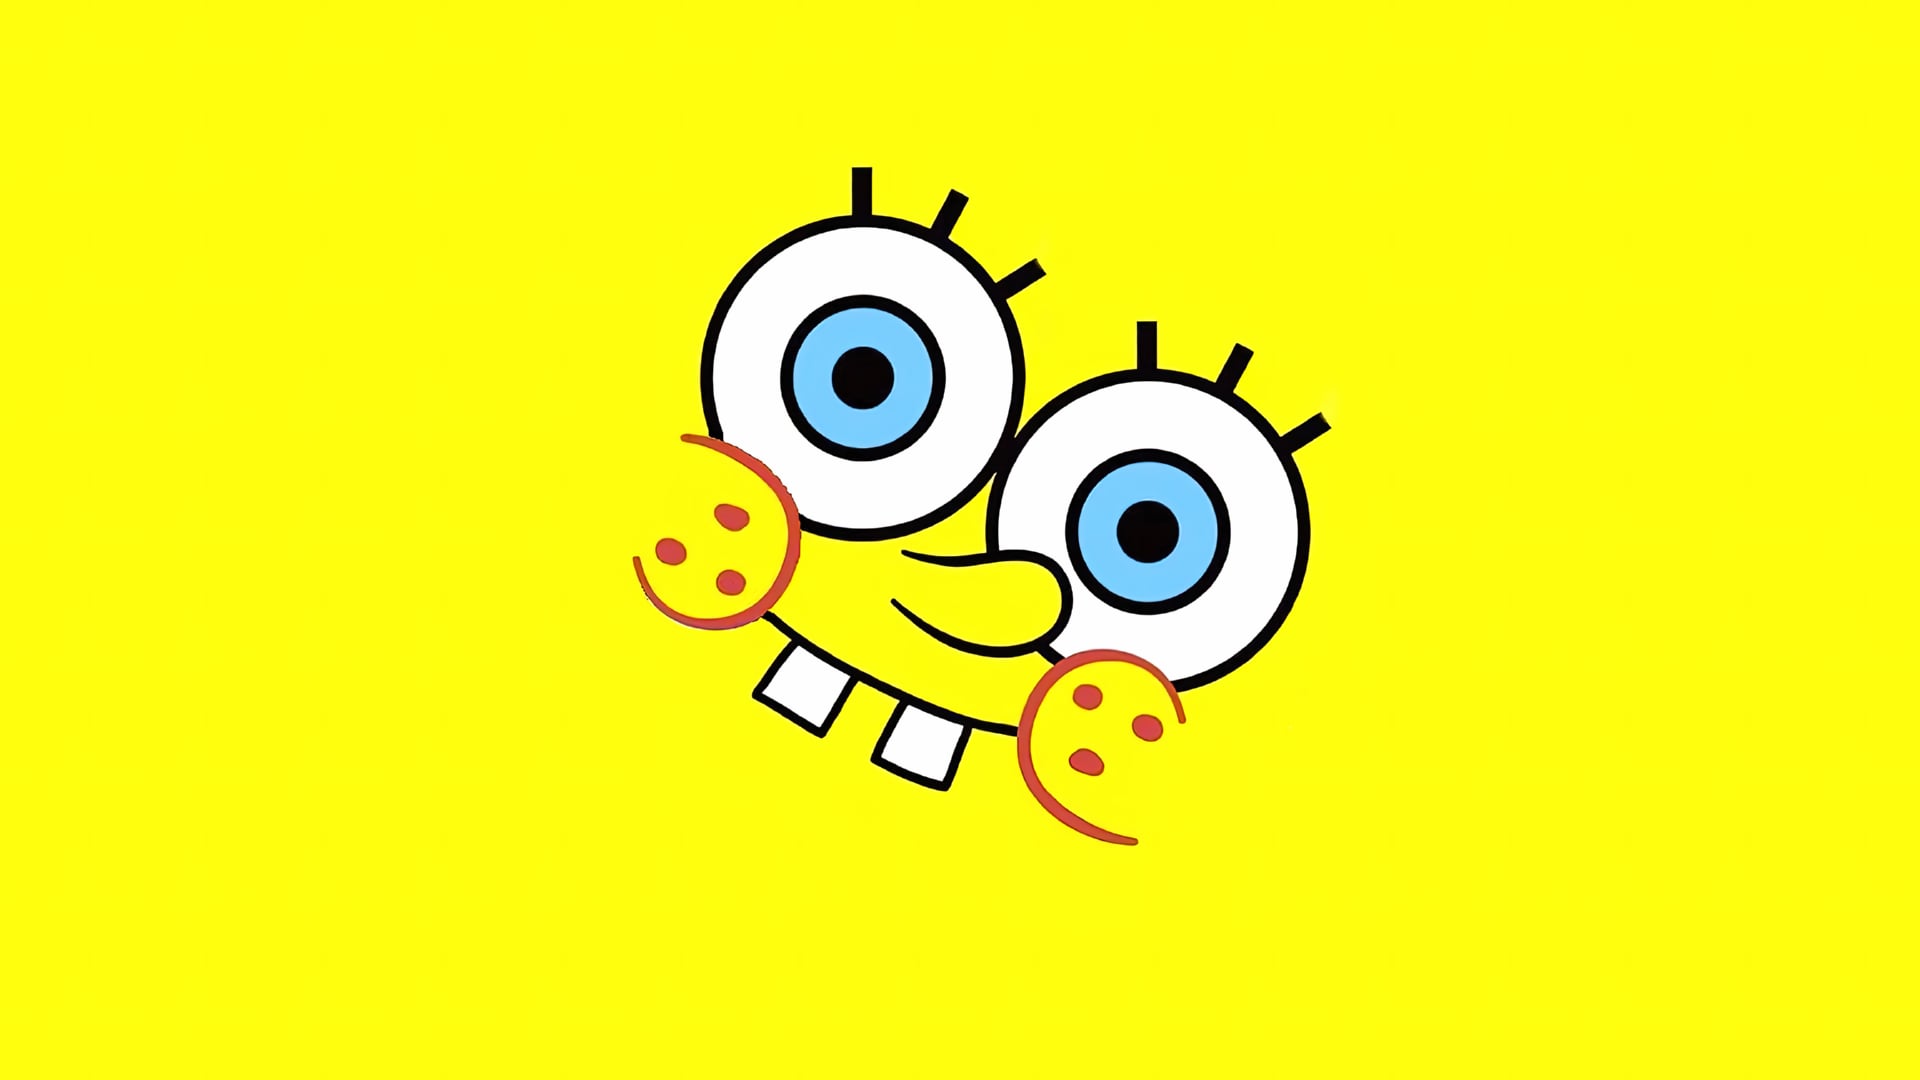 Digital Art SpongeBob SquarePants at 640 x 960 iPhone 4 size wallpapers HD quality